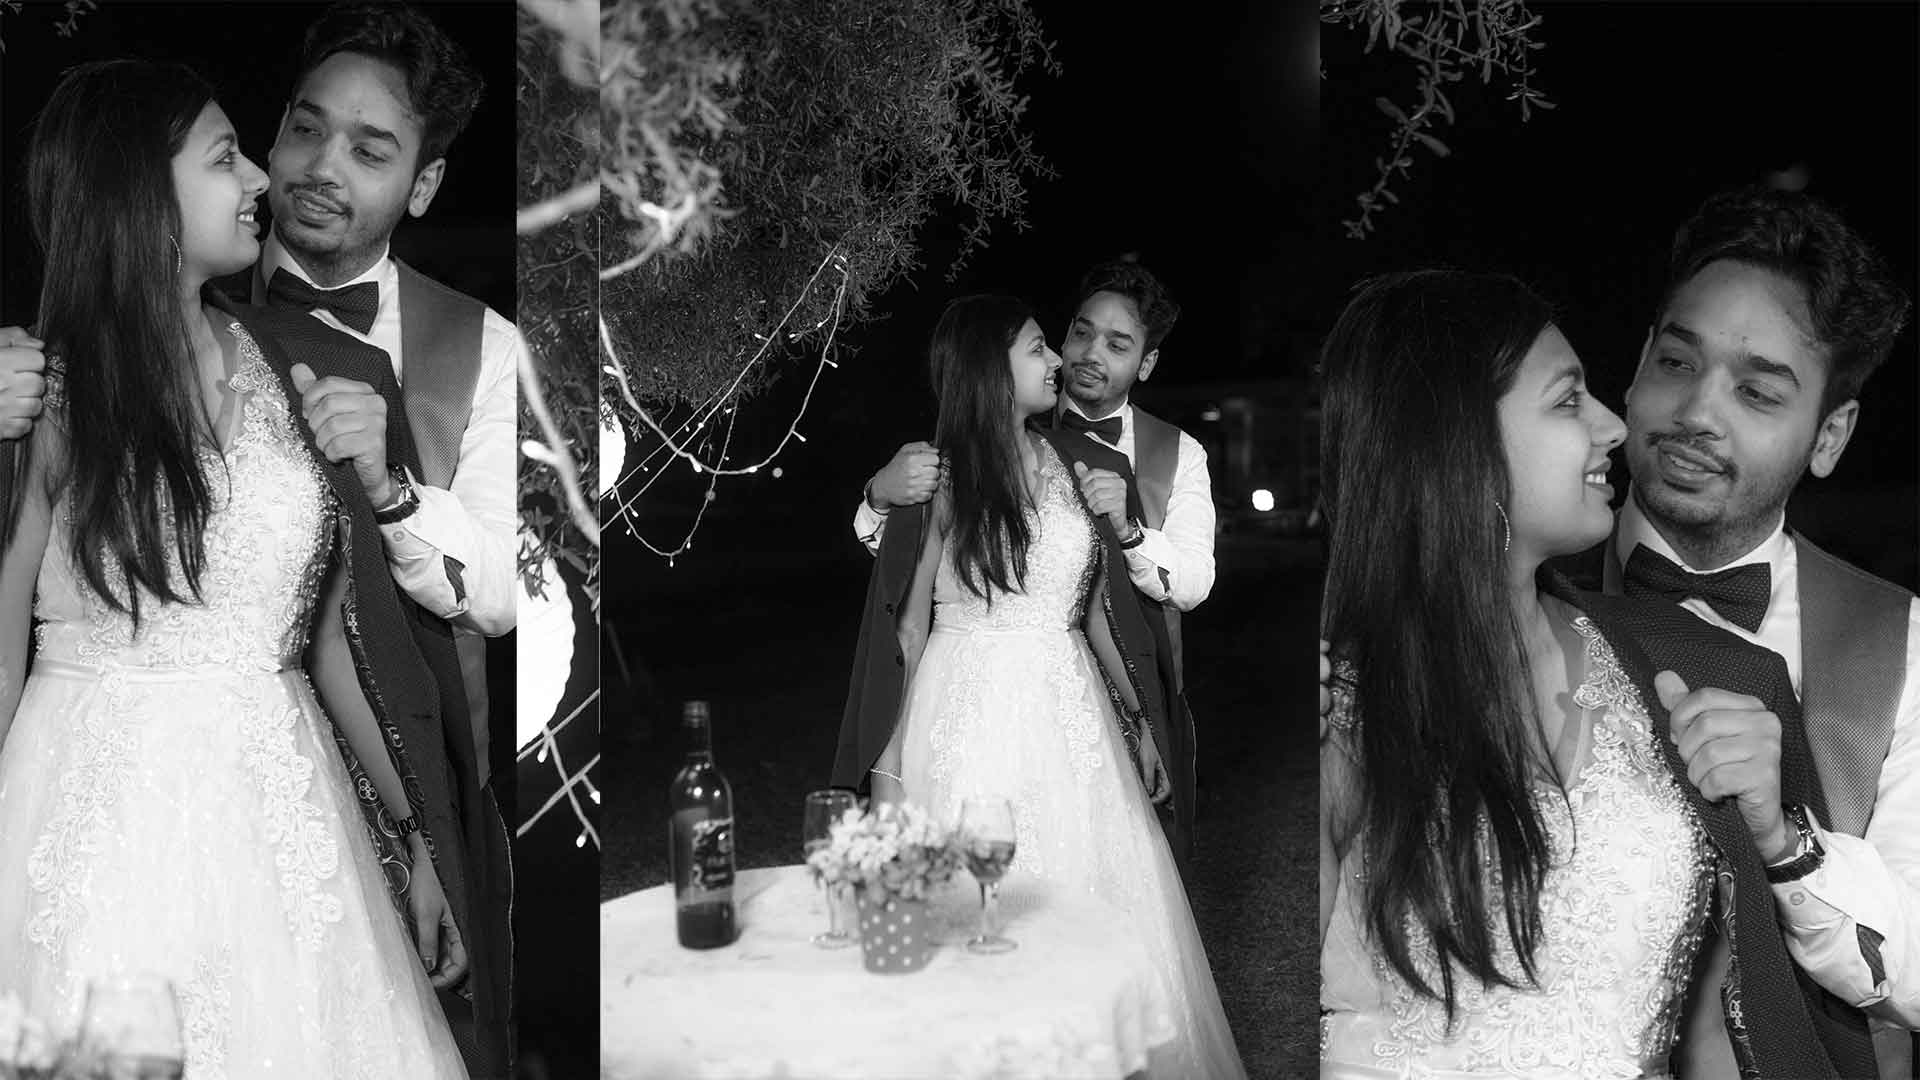 Candid Wedding Photography Delhi Noida NCR || Framographer Inc.